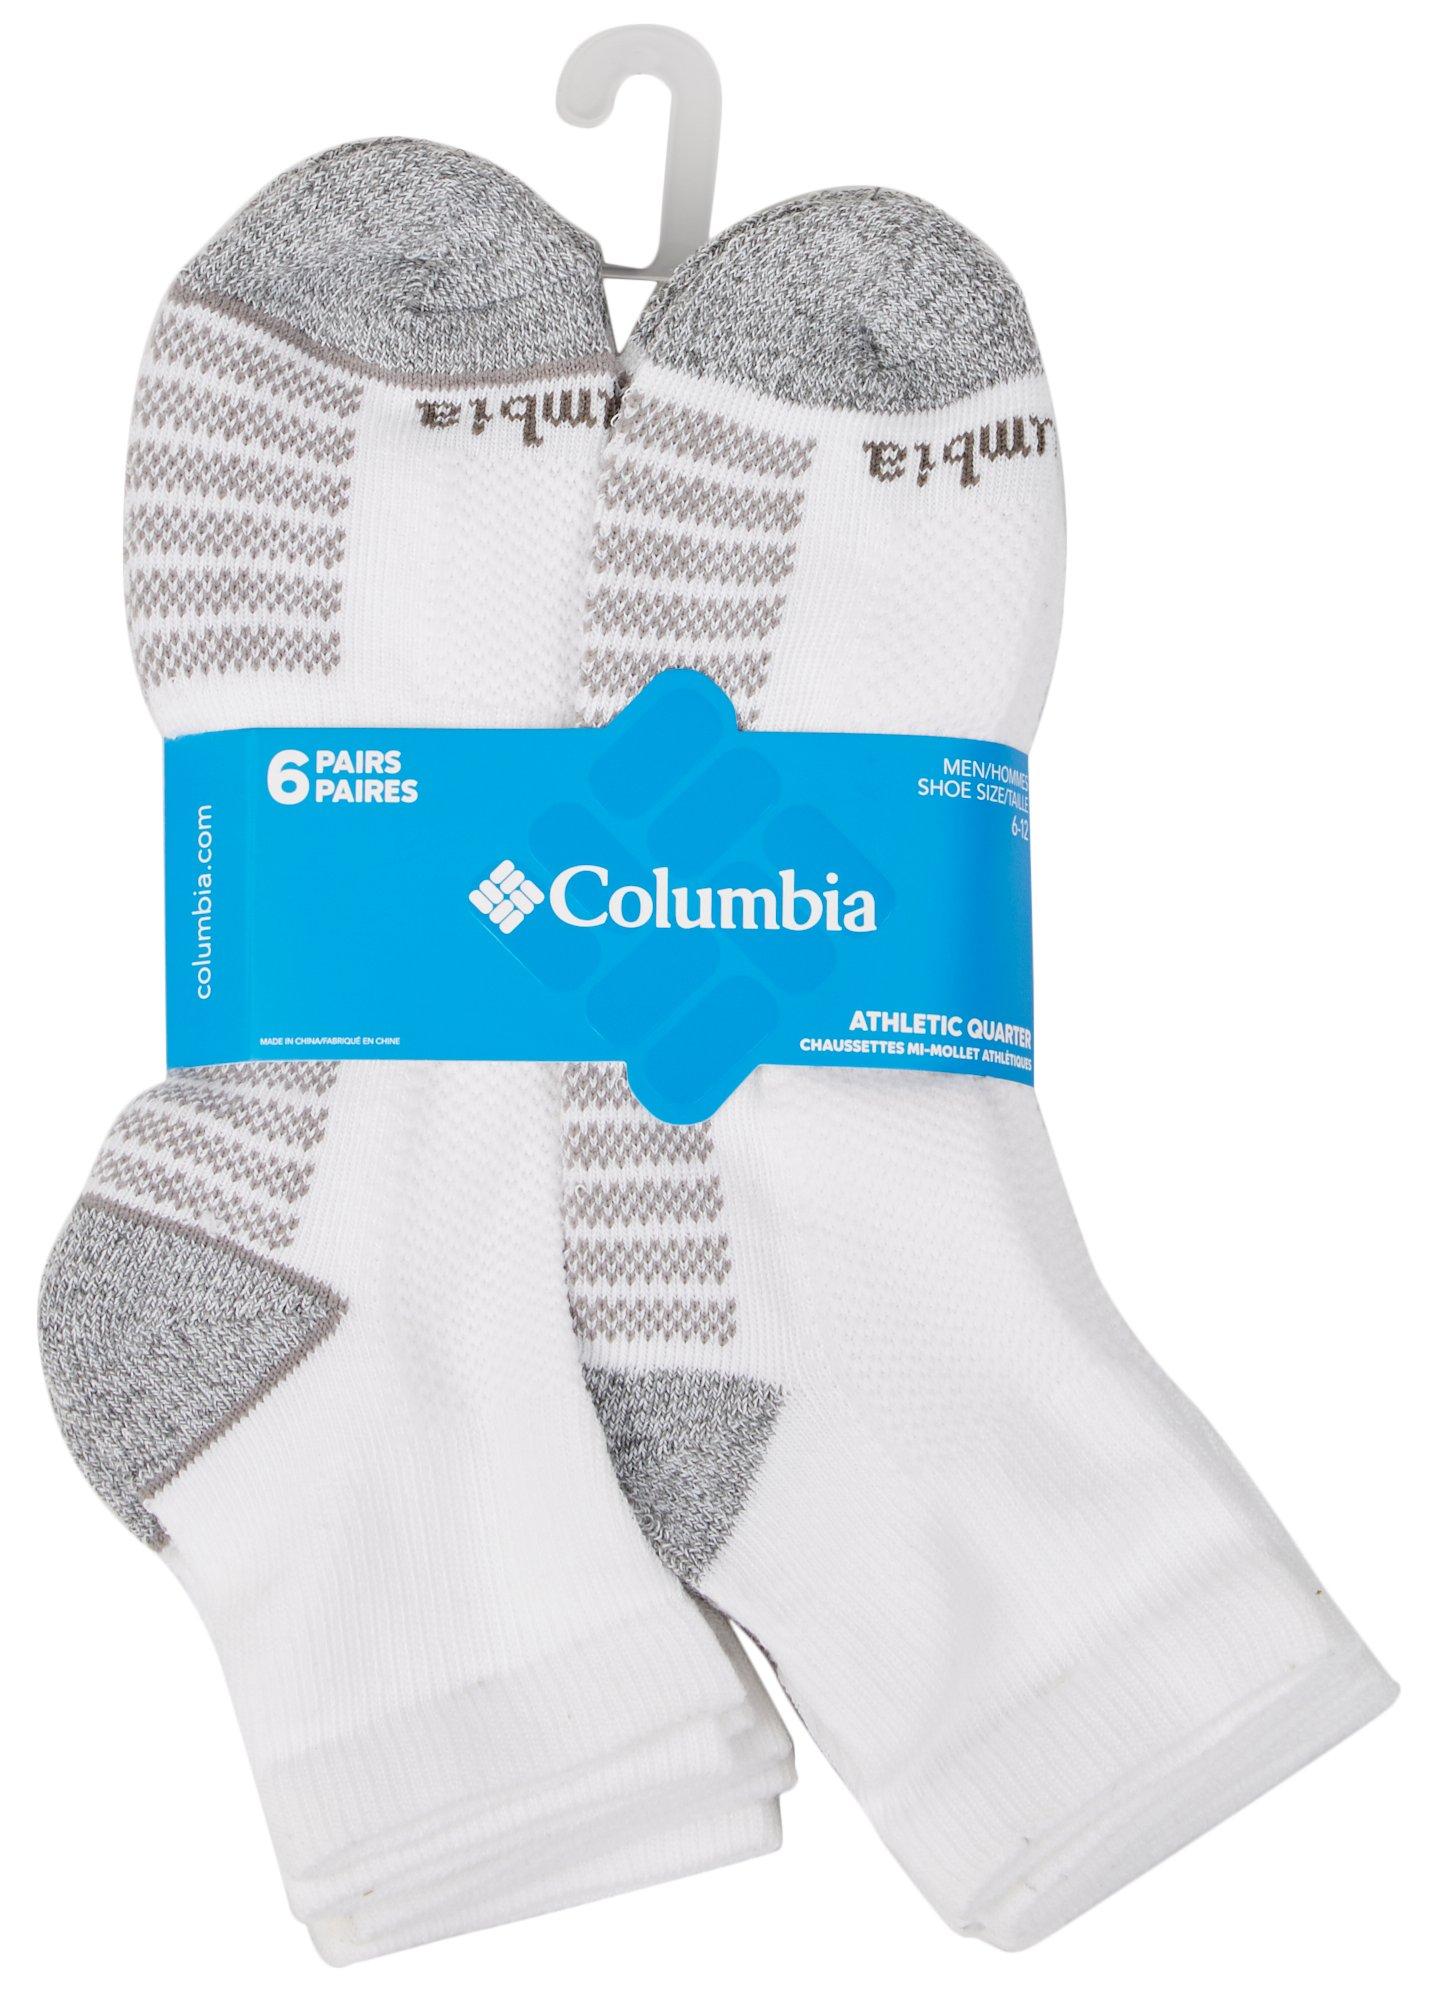 Columbia Mens 6-pk. Athletic Quarter White/Gray Socks